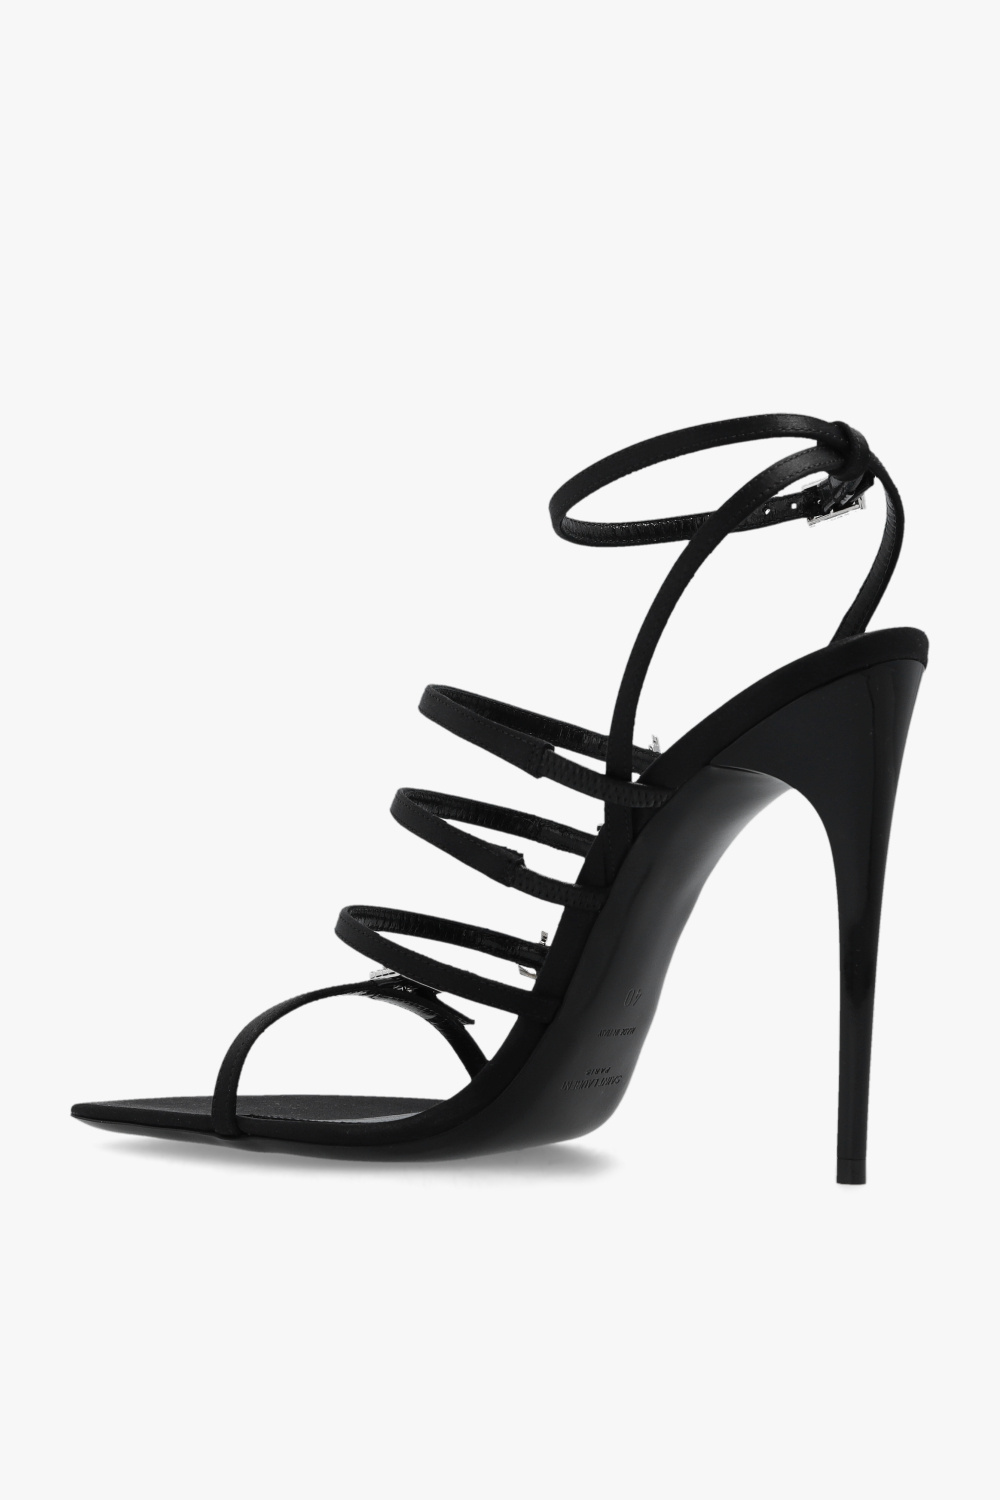 Saint Laurent 'Jerry’ heeled sandals